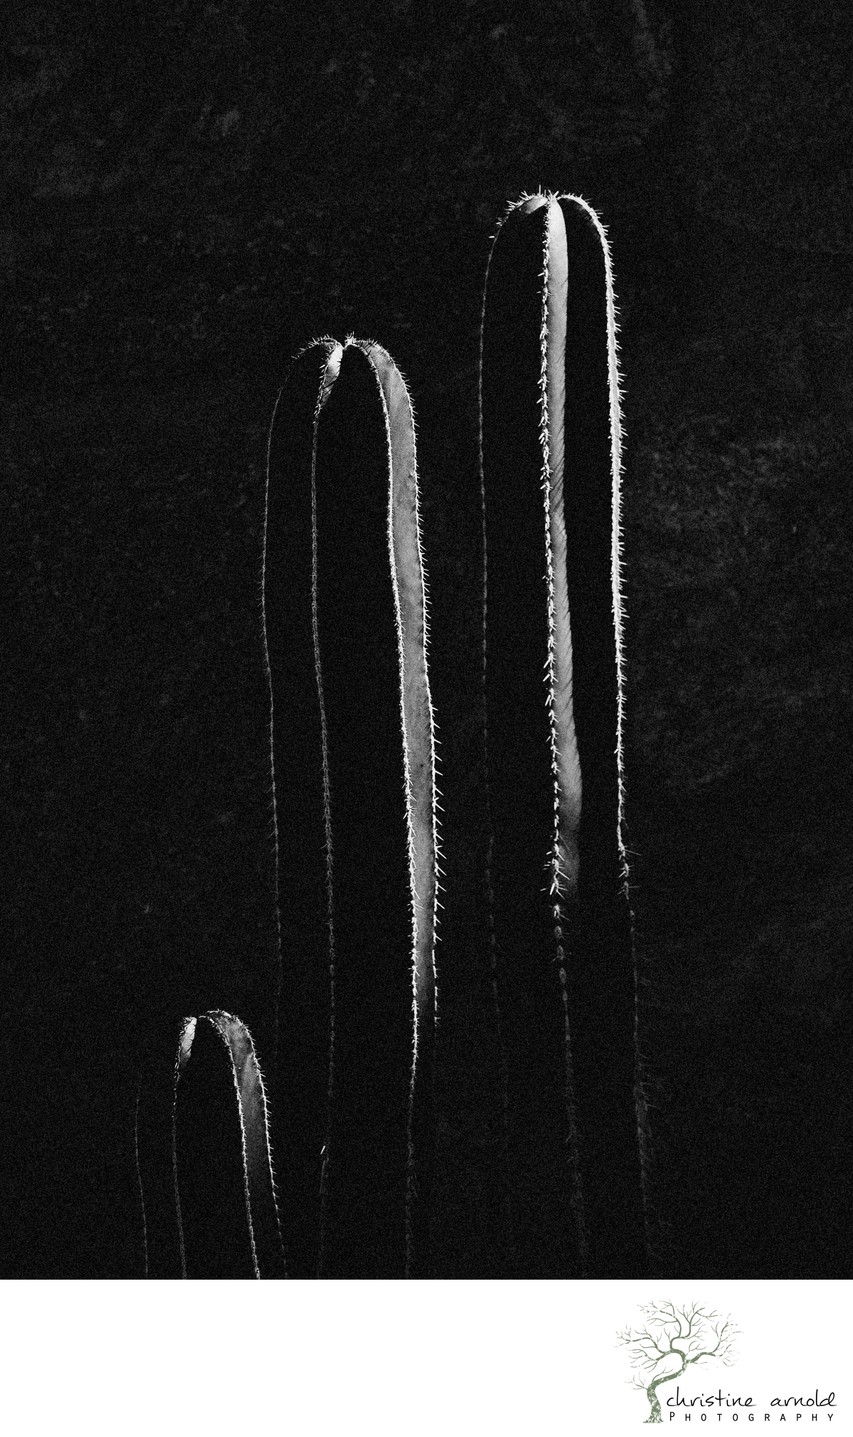 Digital fine art black and white photography